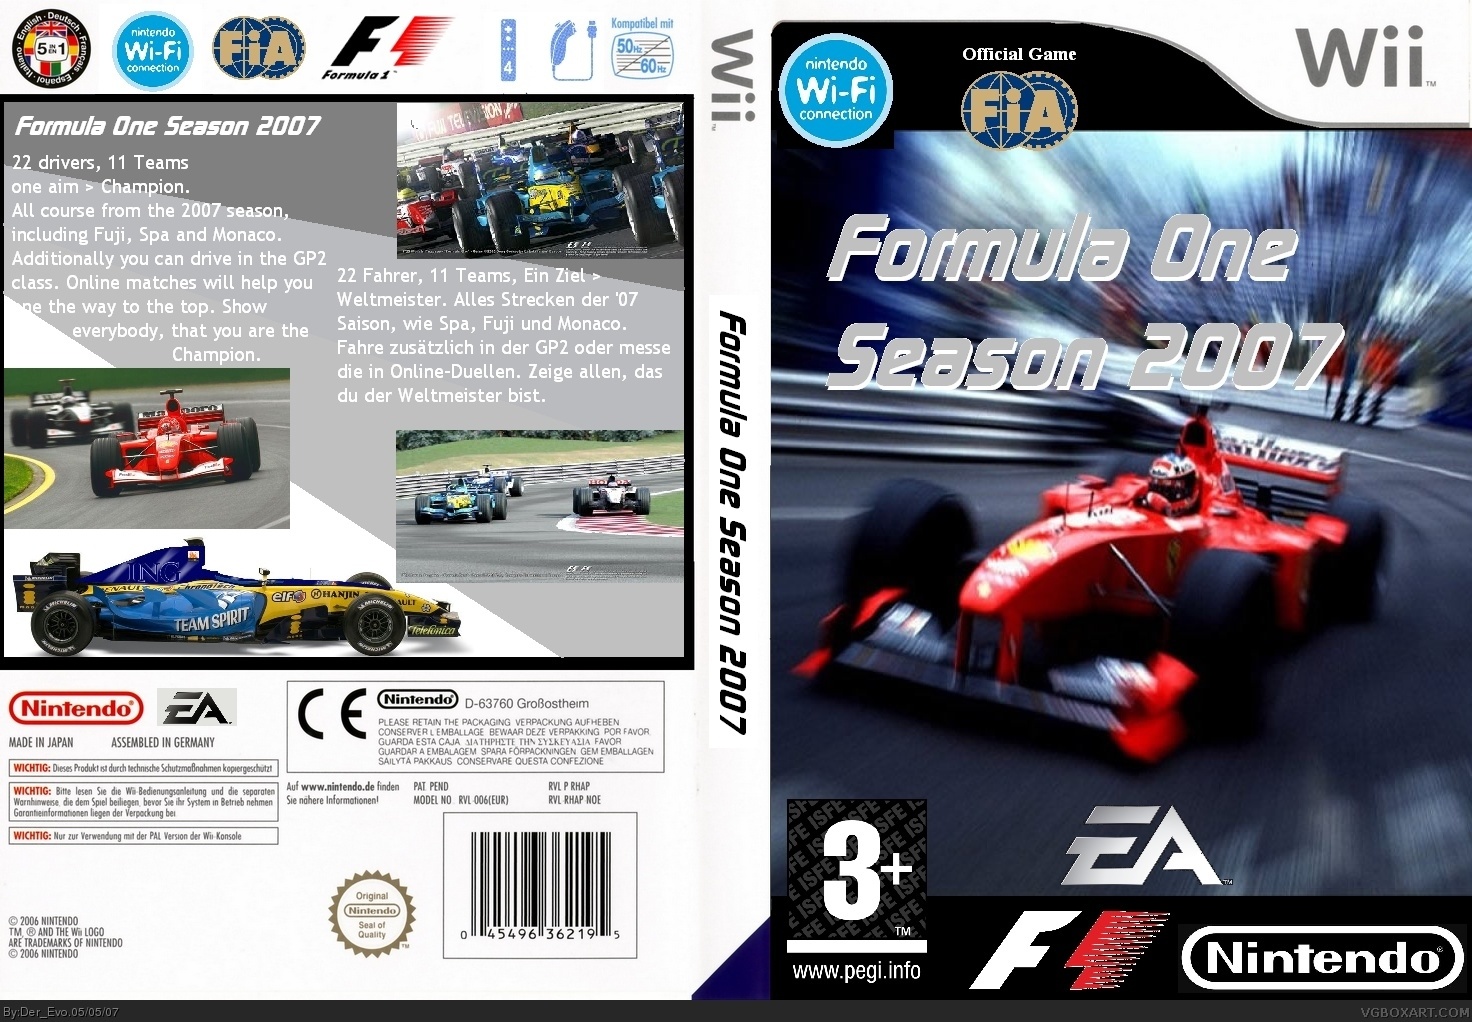 Formula One Season 2007 box cover